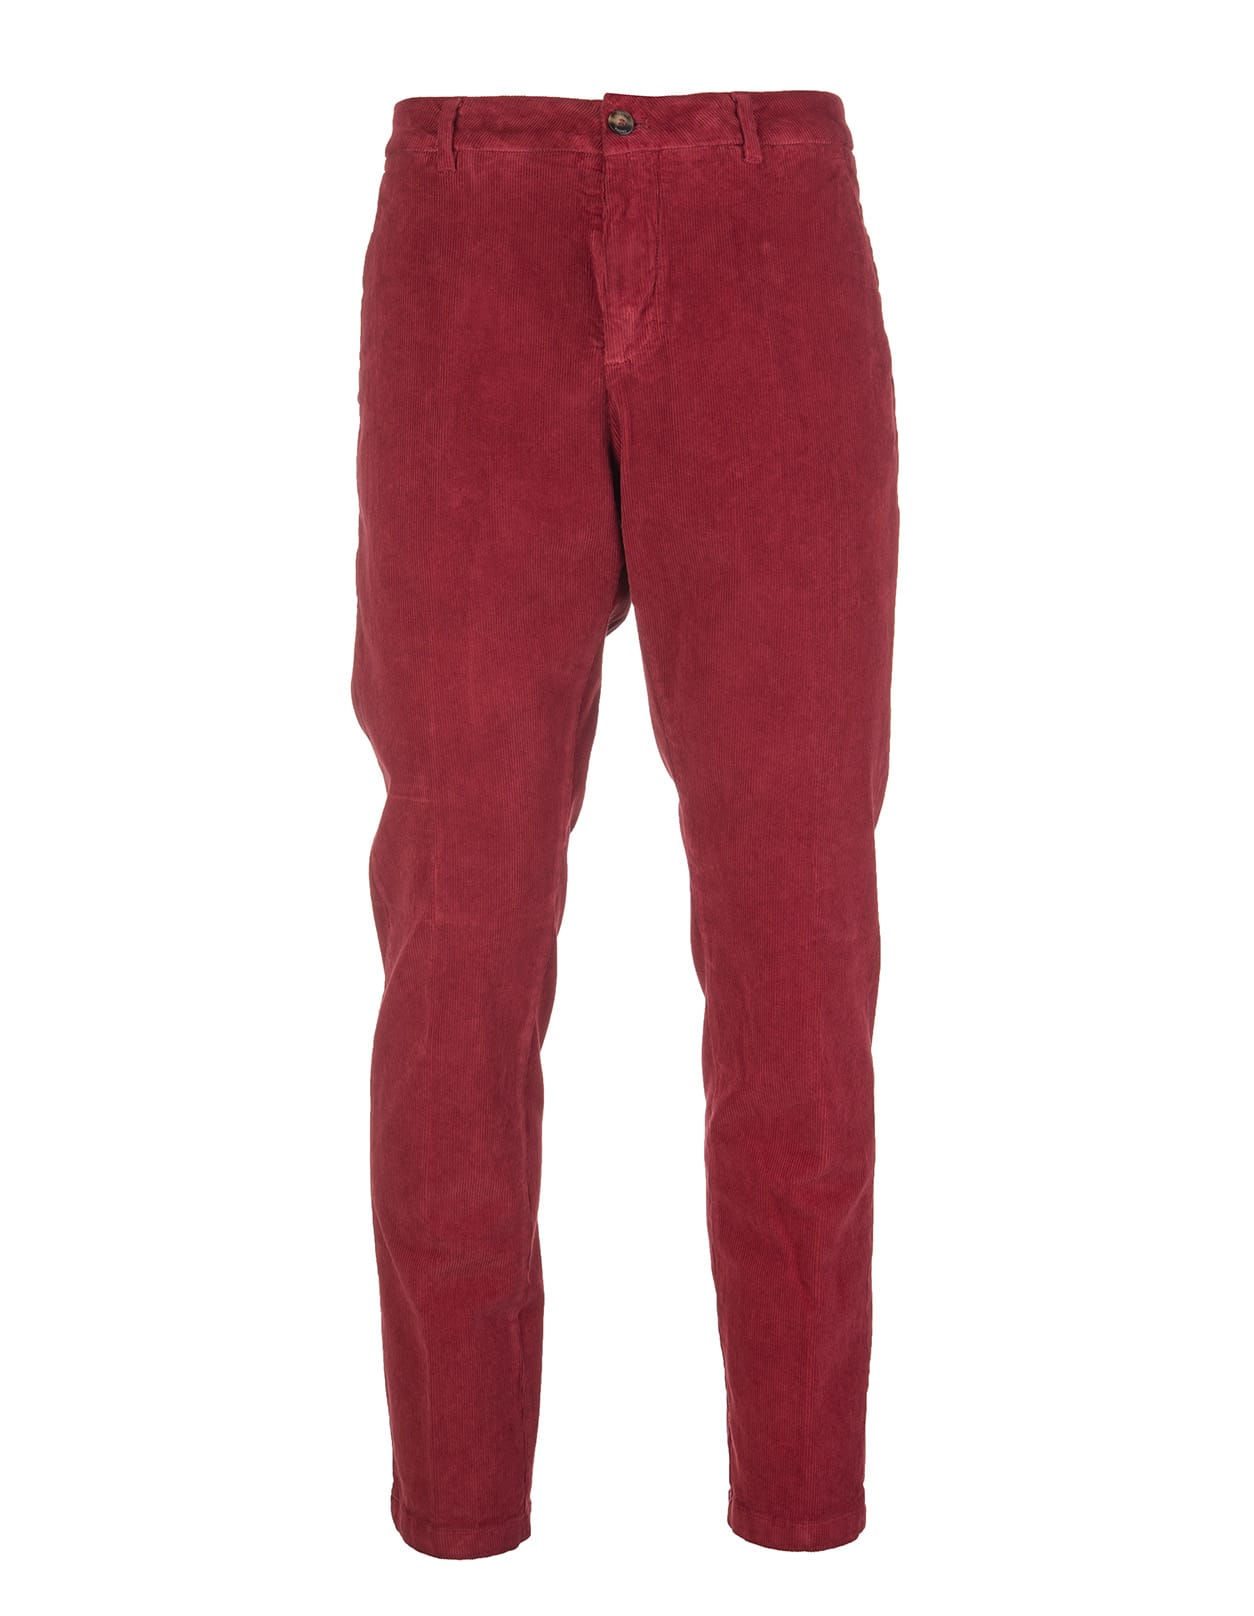 Cruna Marais Trousers In Red Corduroy